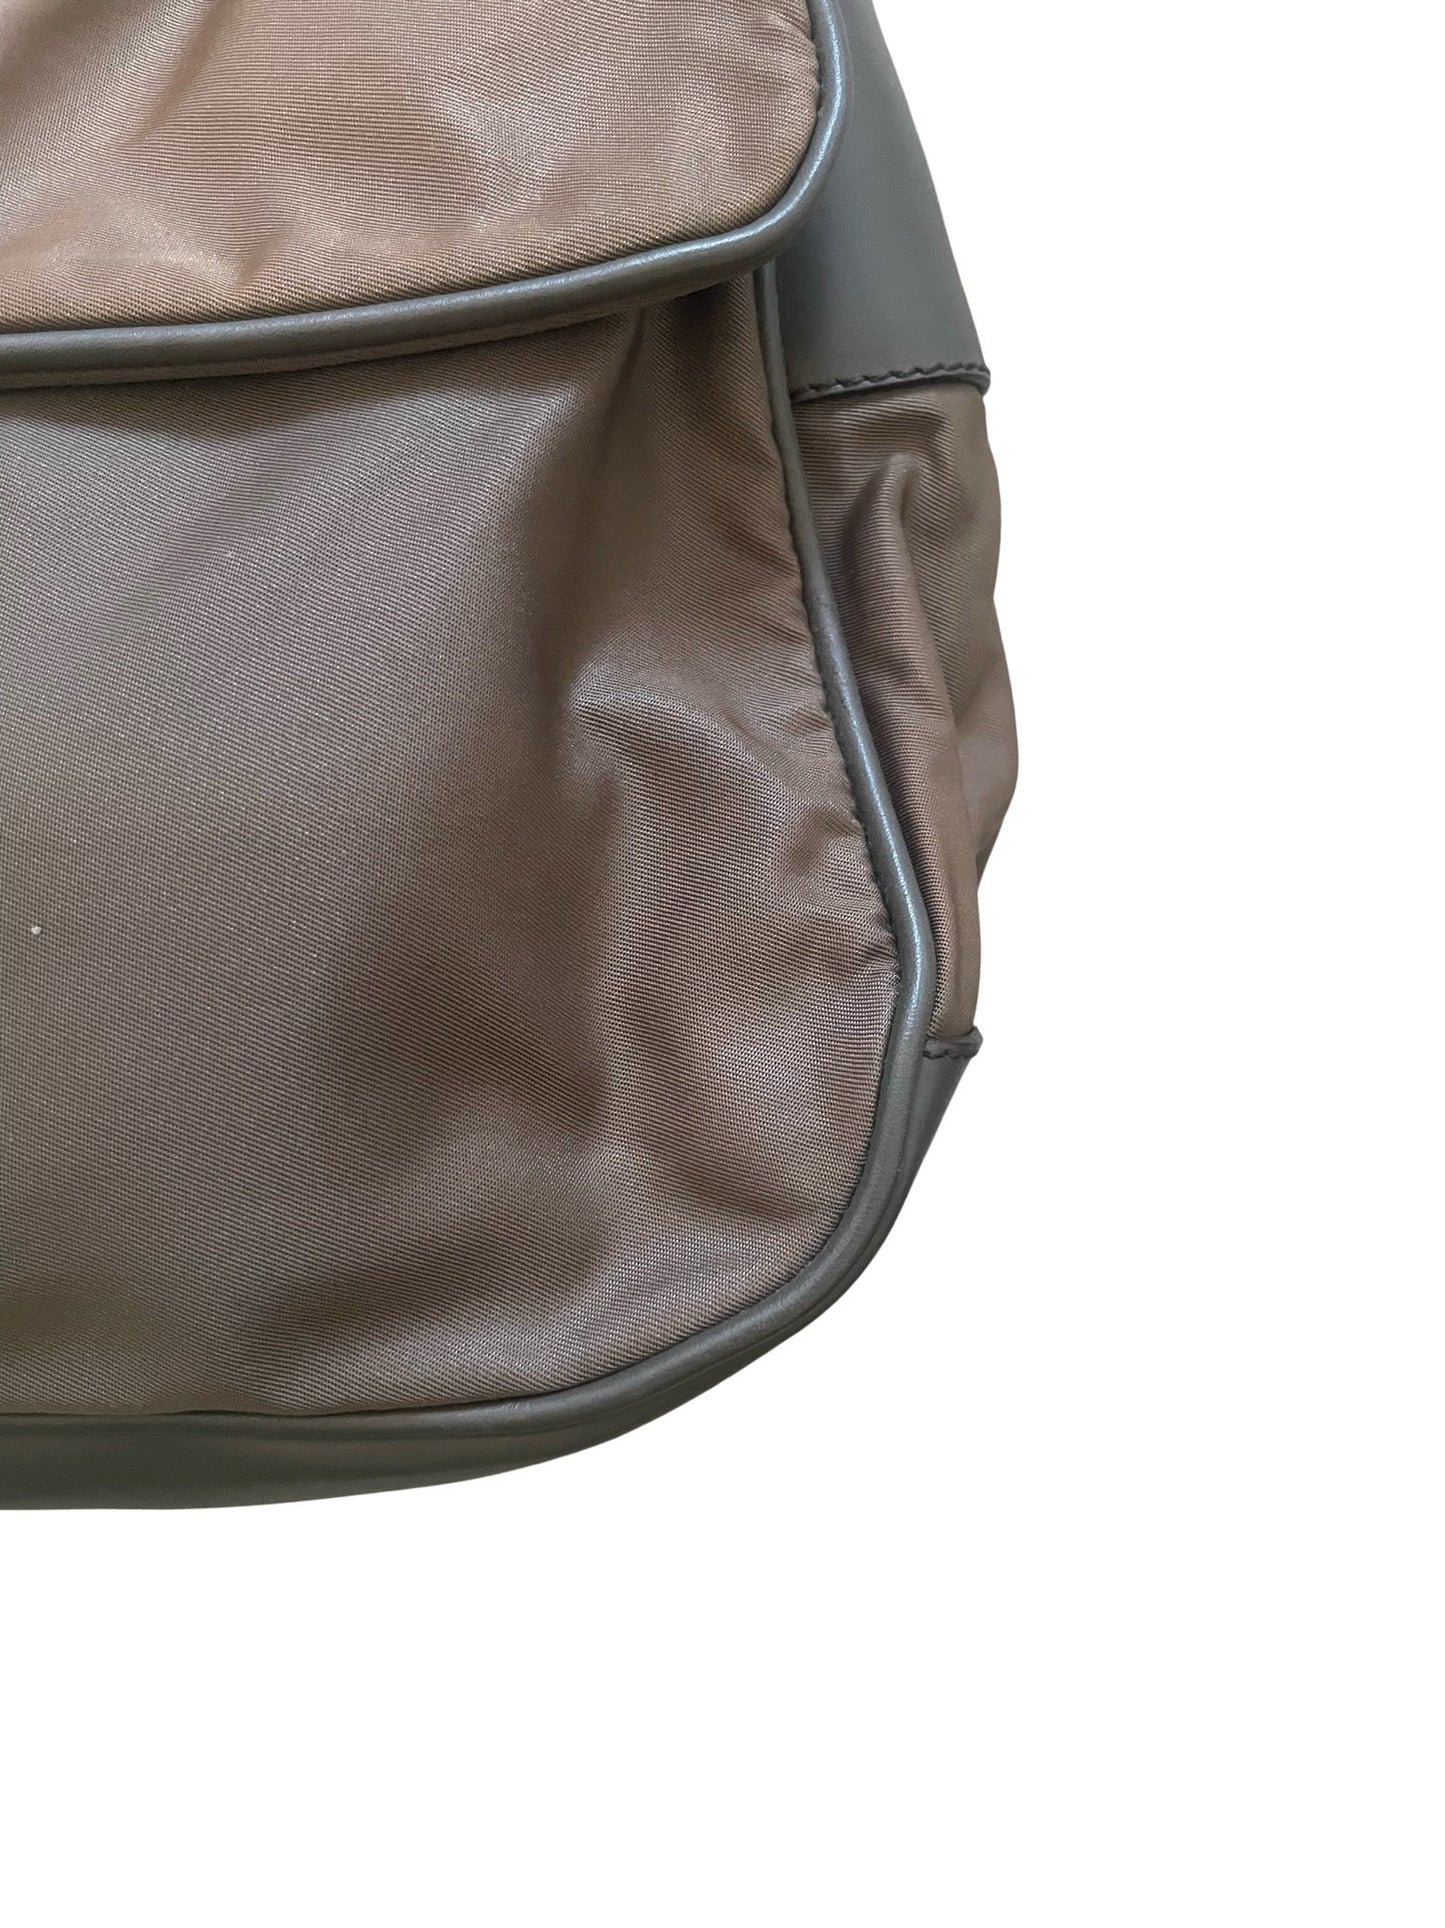 Prada Brown Nylon and Leather Shoulder Bag